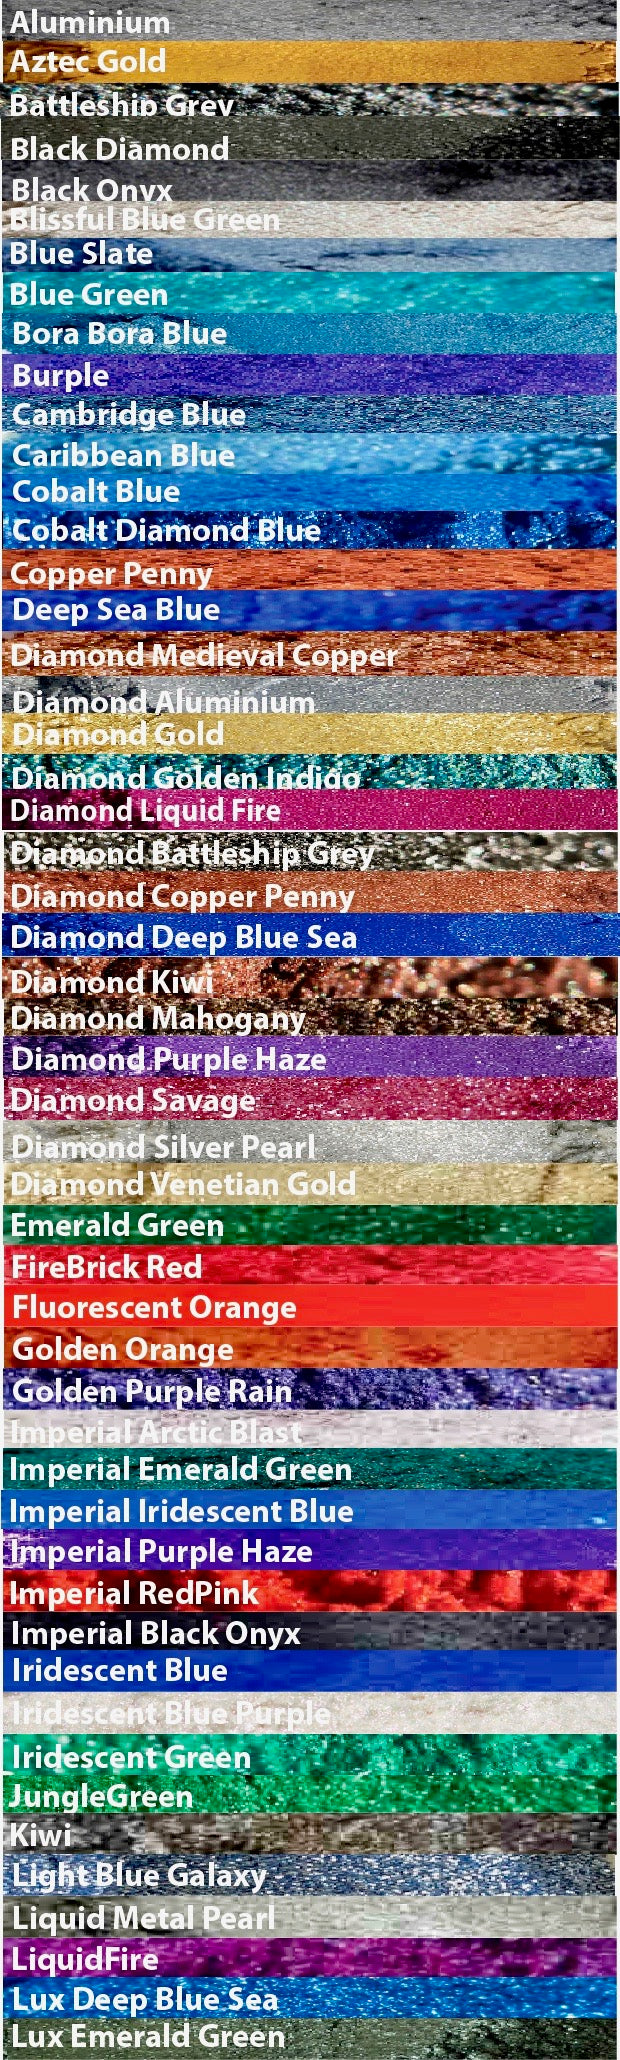 "DIAMOND GOLD" Black Diamond Pigments